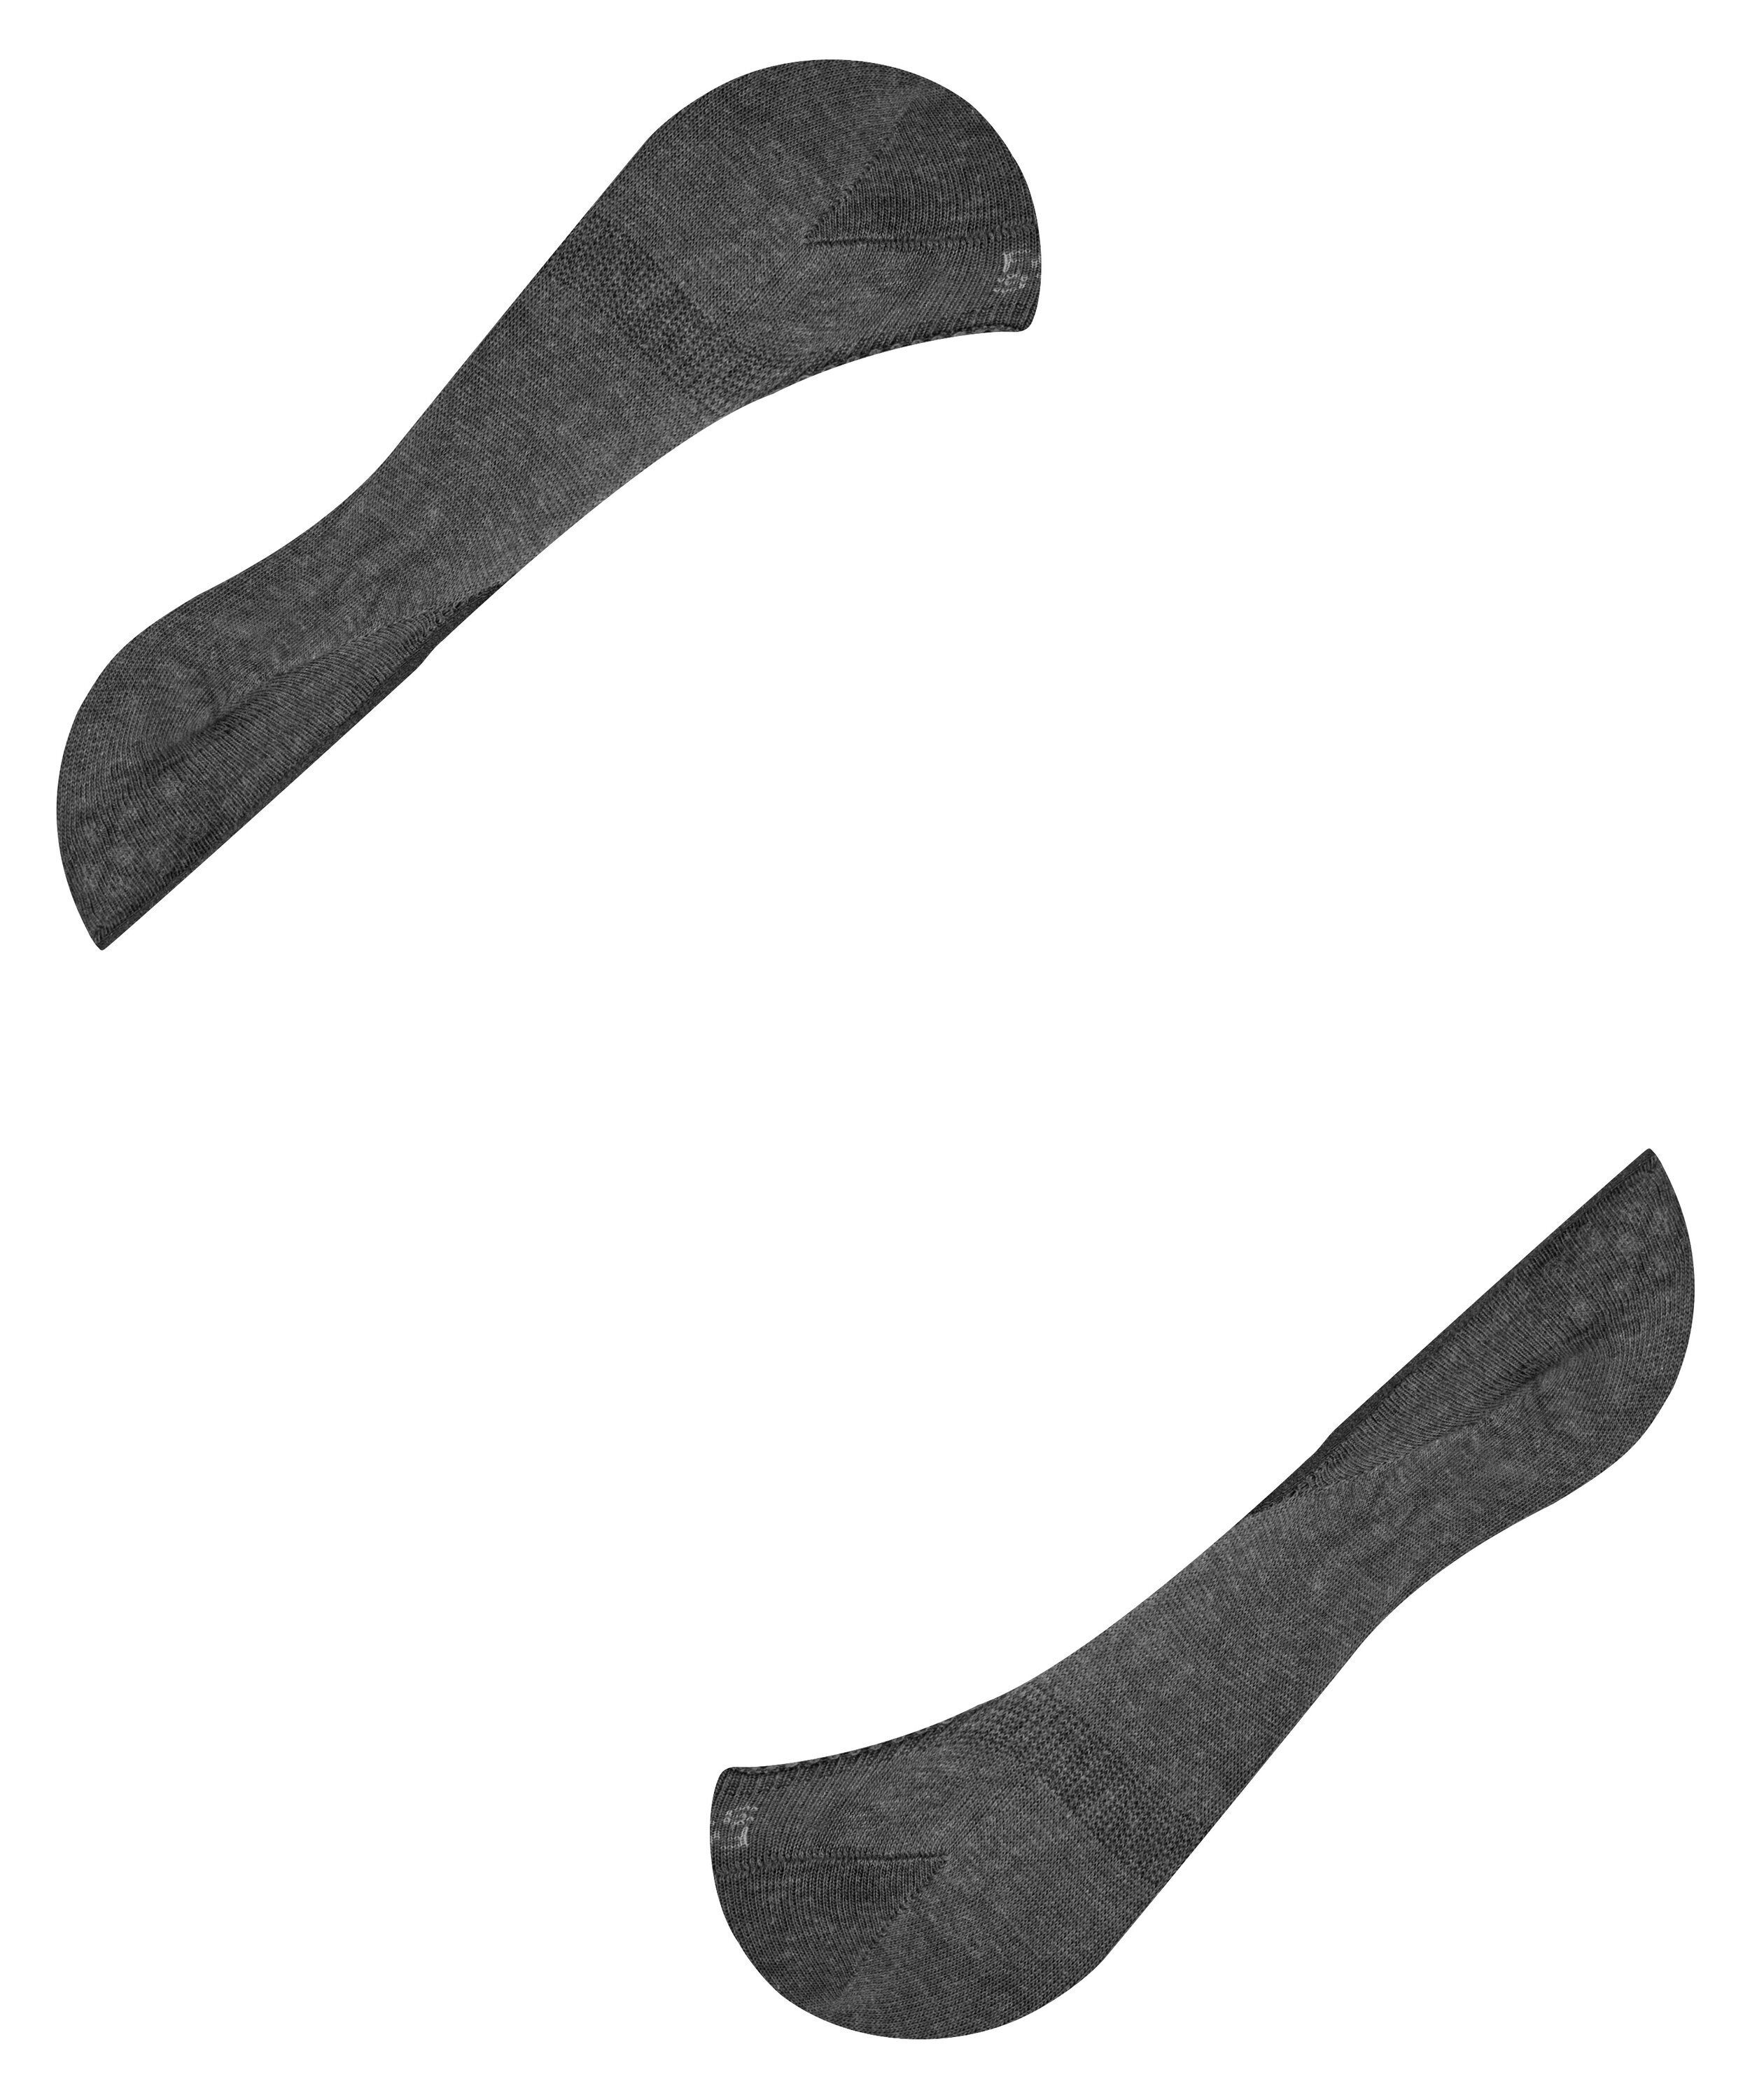 FALKE Füßlinge Cut mit (3000) Anti-Slip-System Medium black Step